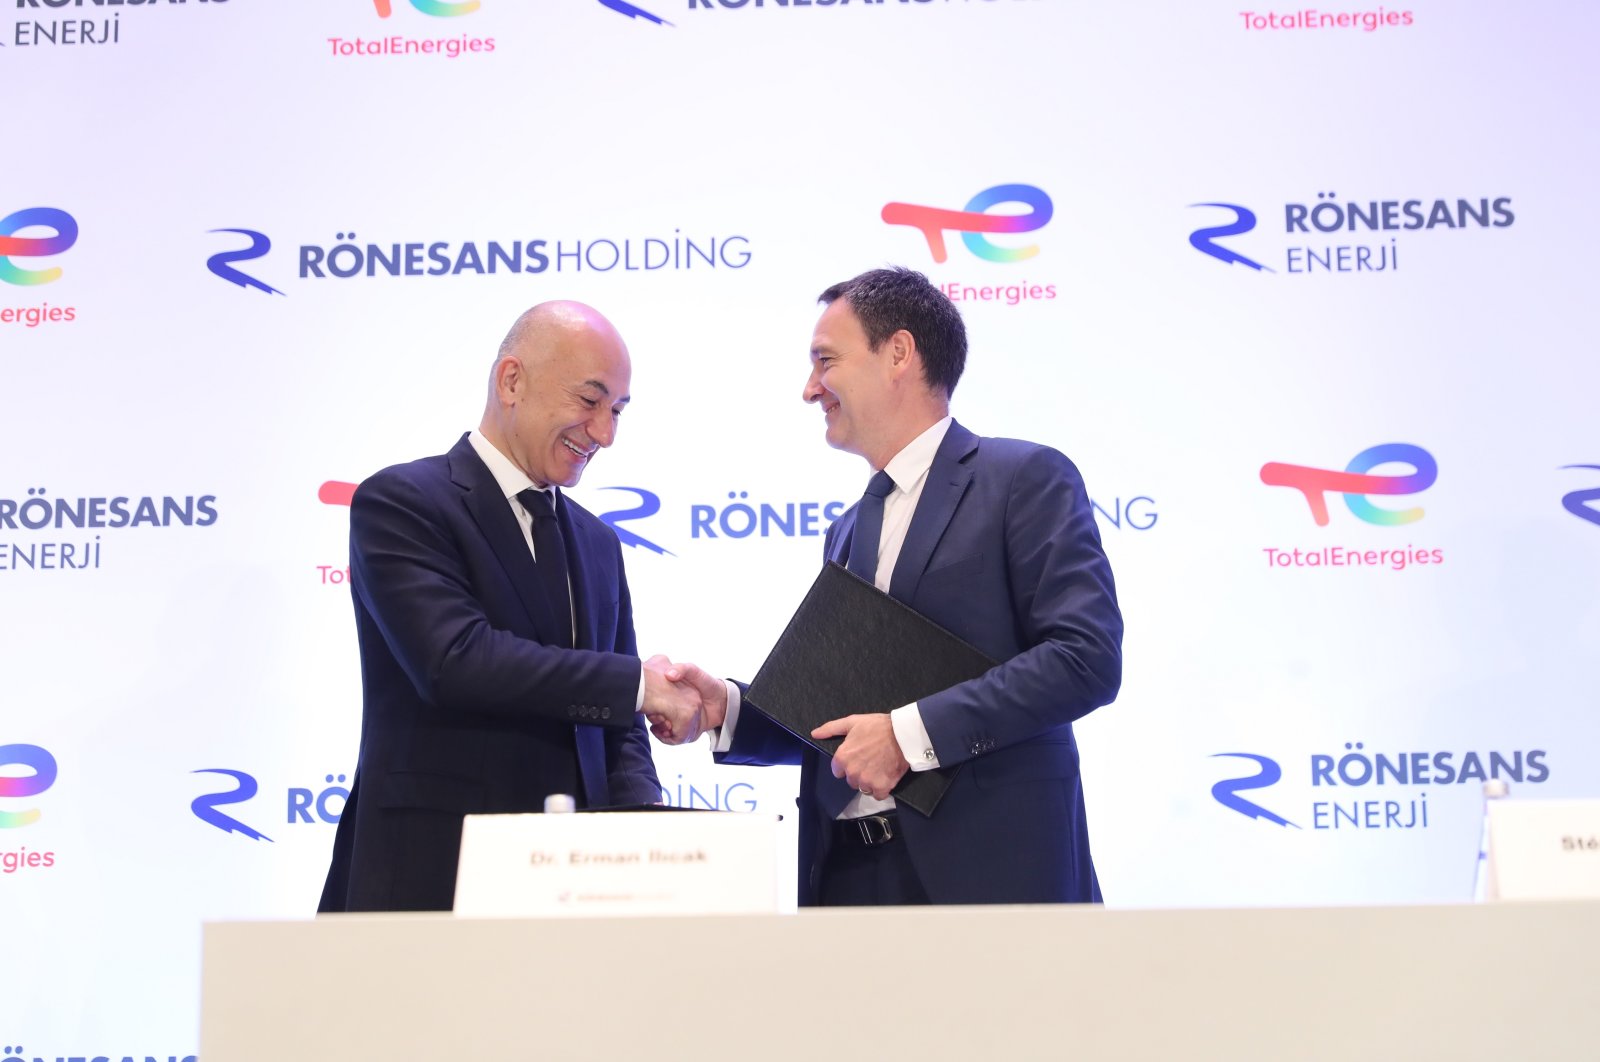 Raksasa Prancis TotalEnergies membeli 50% saham di Rönesans Enerji Türkiye